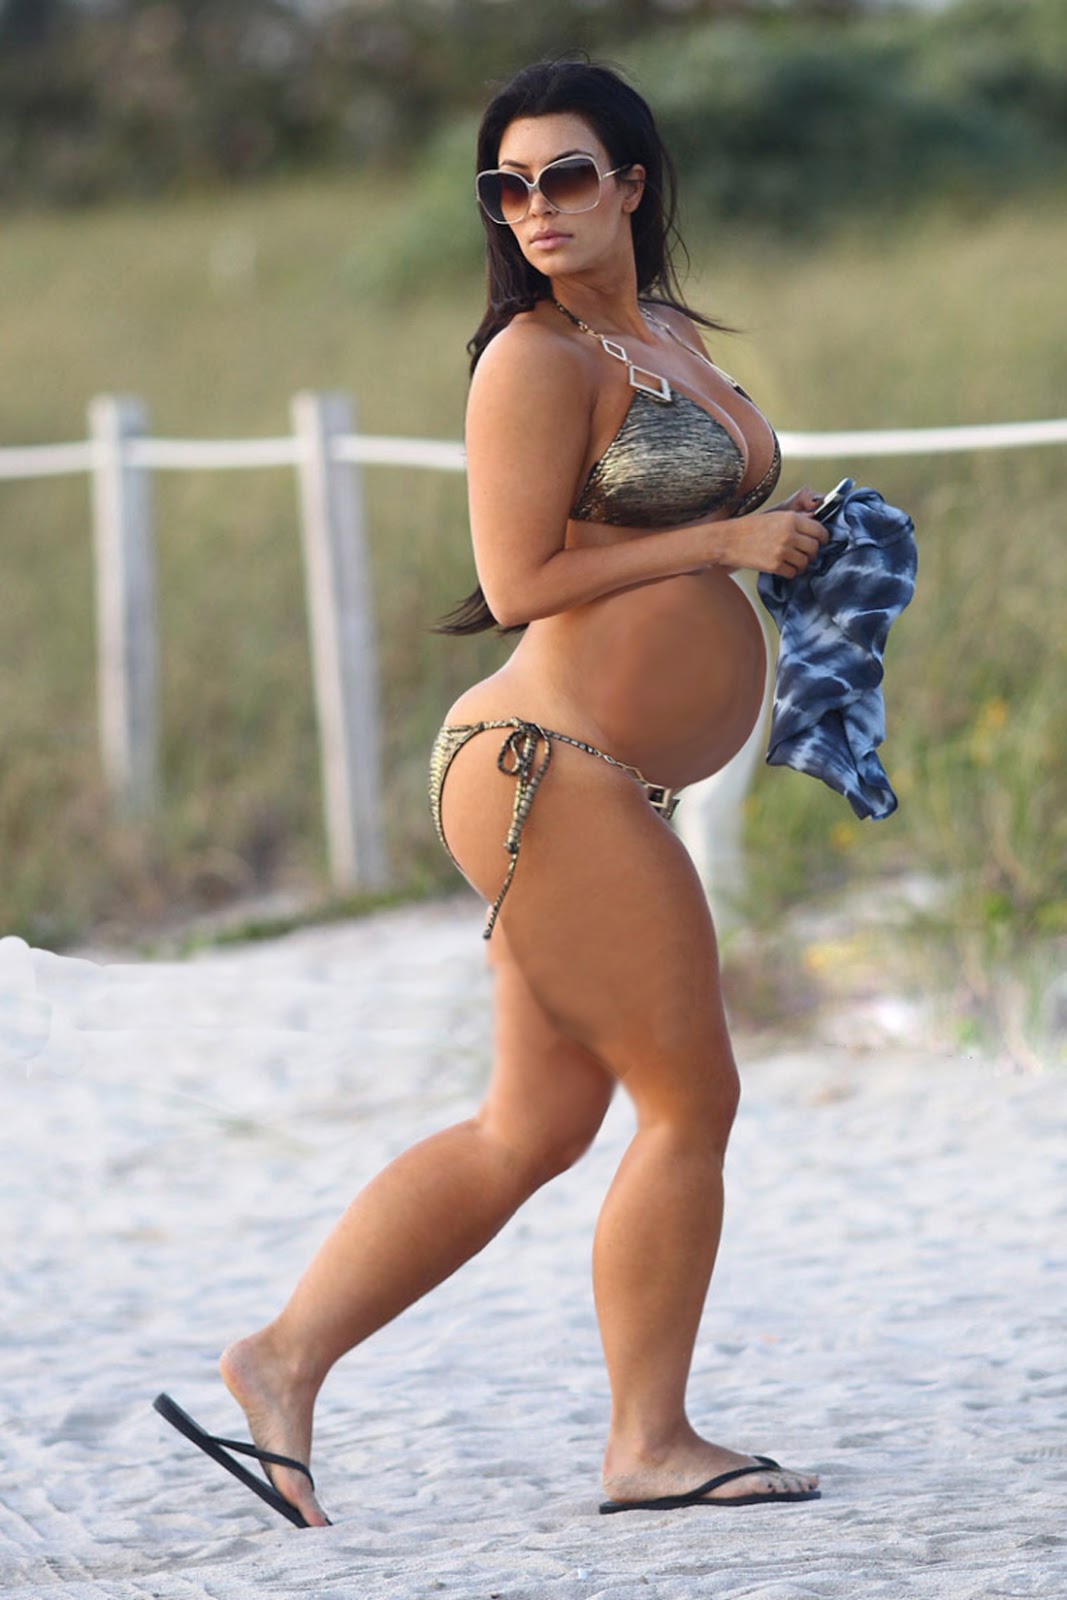 http://4.bp.blogspot.com/-eHbj4sije9A/UOSkQRDW2qI/AAAAAAAAAG0/77WeXHgnngs/s1600/kim-kardashian-pregnant-bikini.jpg